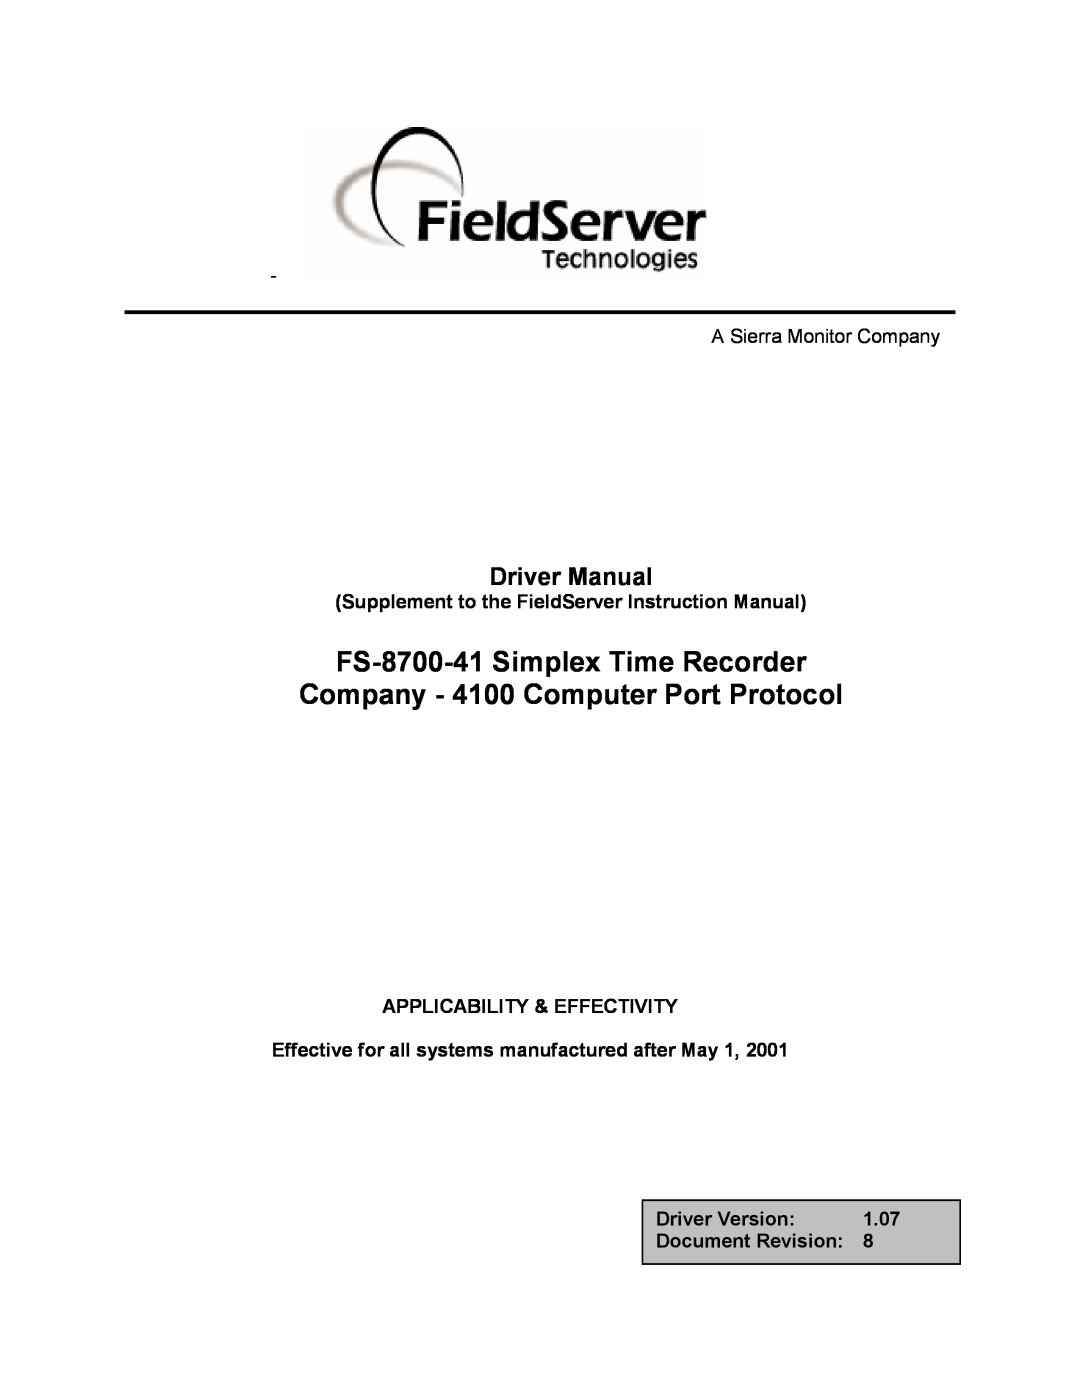 FieldServer instruction manual FS-8700-41 Simplex Time Recorder, Company - 4100 Computer Port Protocol, Driver Manual 